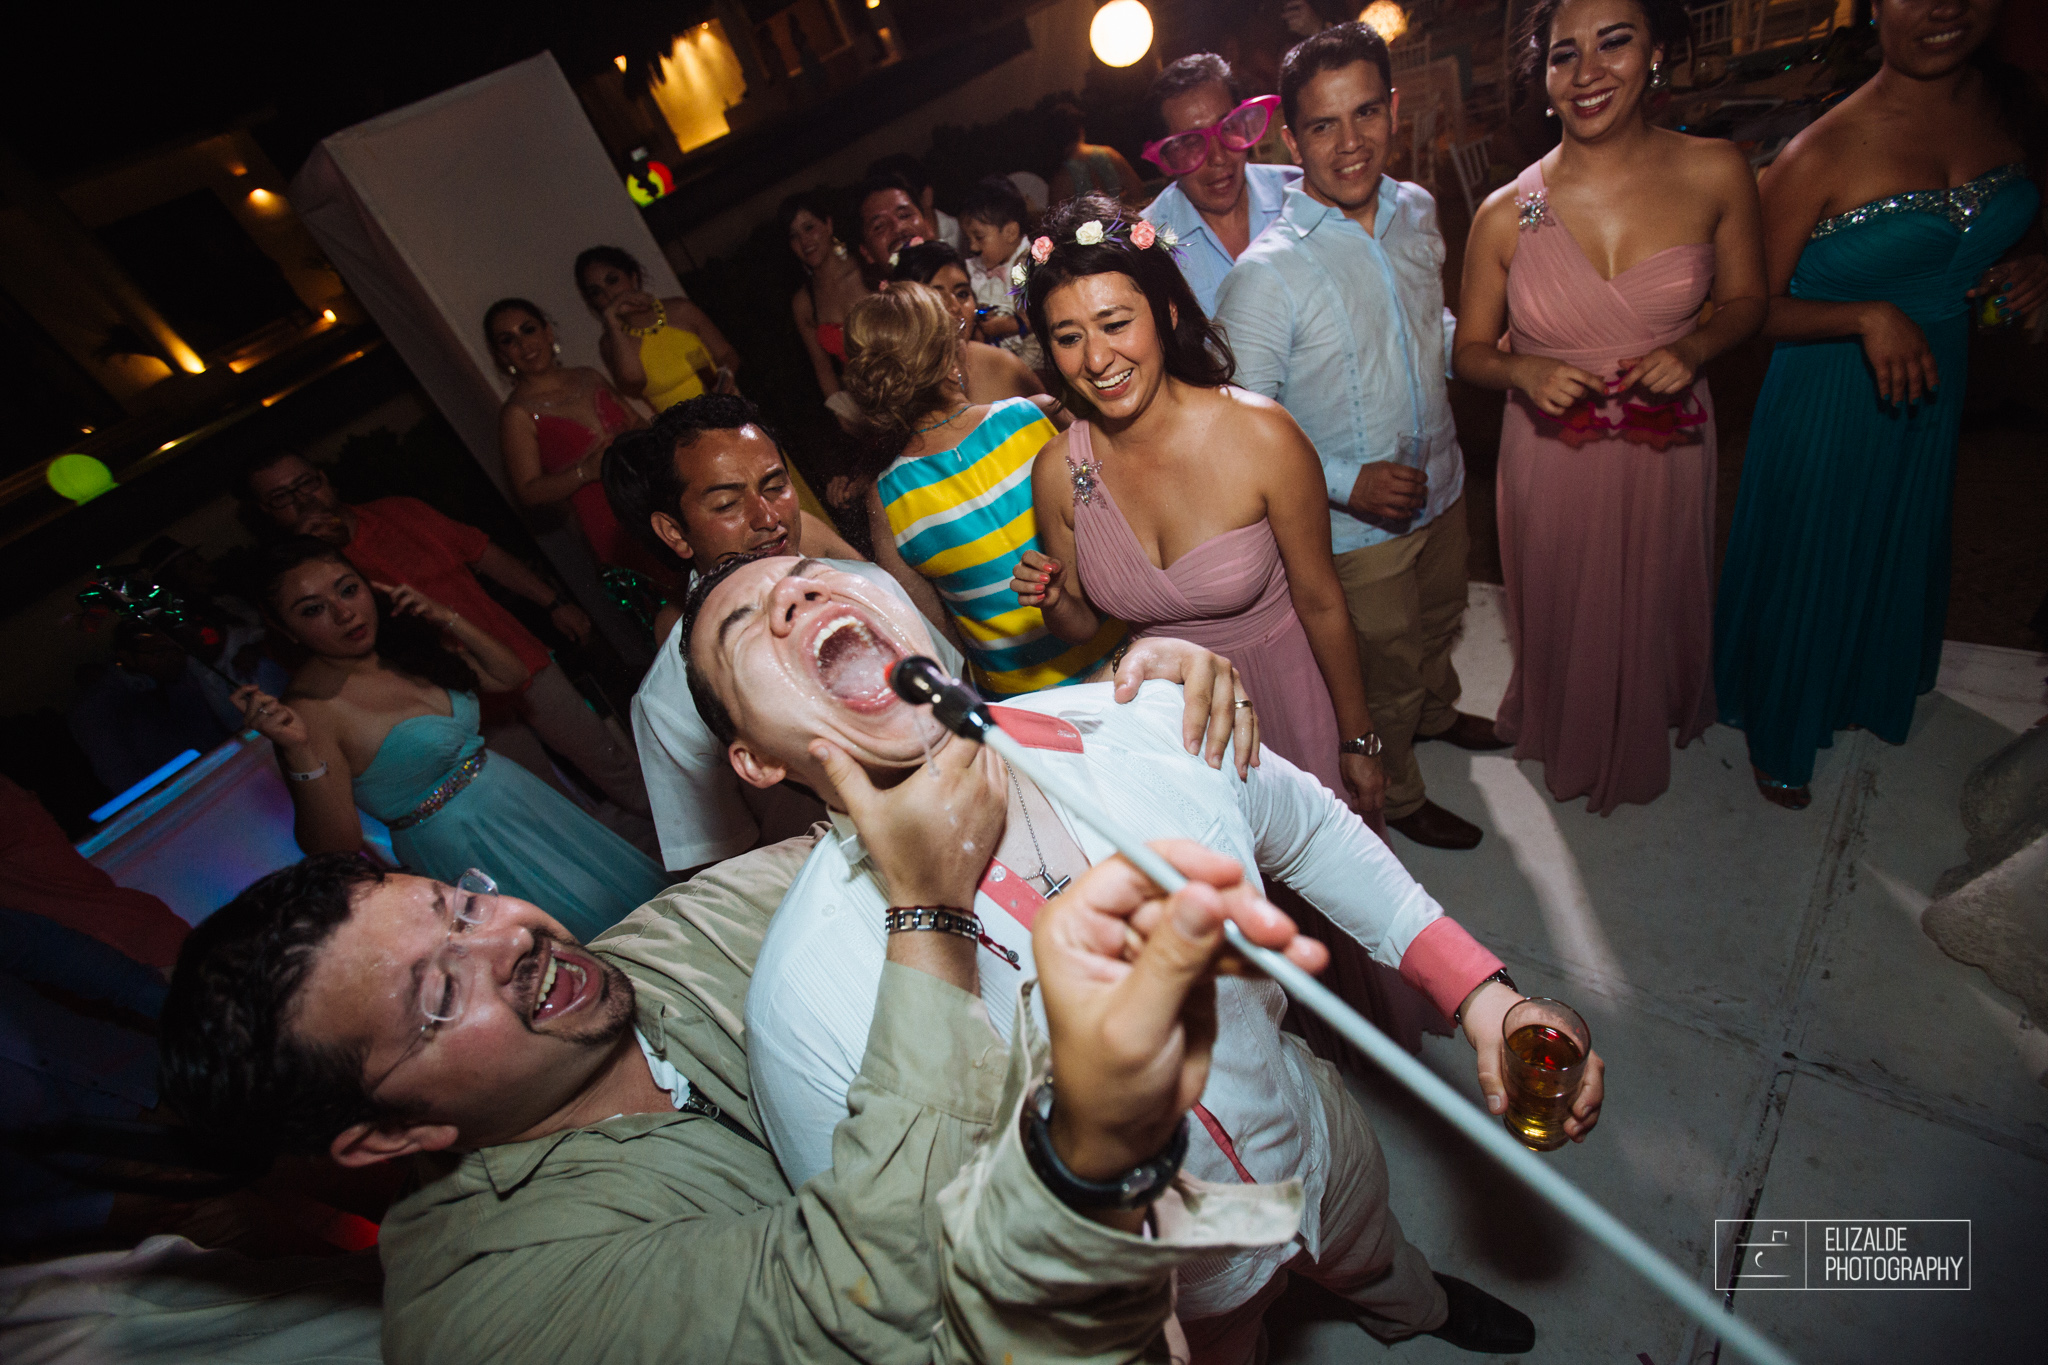 Pay and Ferran_Acapulco_Destination Wedding_Elizalde Photography-137.jpg